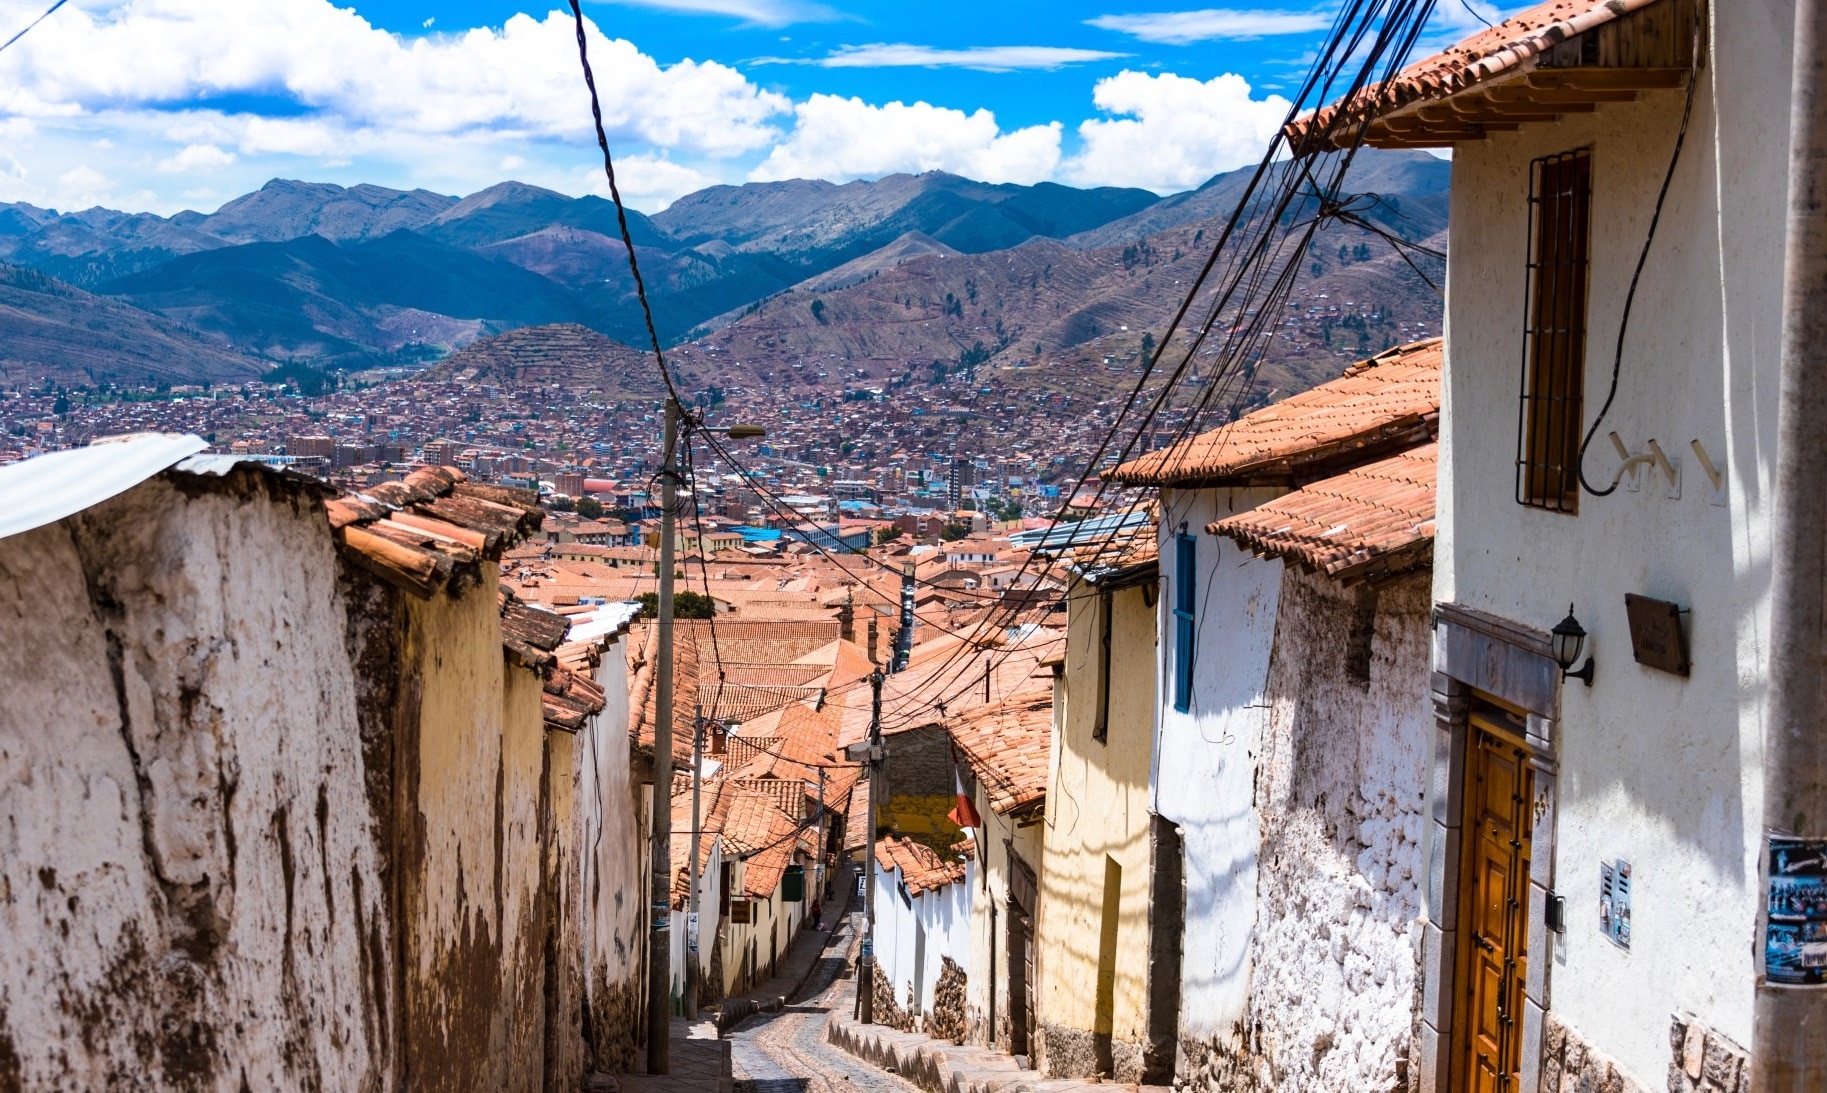 Power lines overlooking valley in Cusco, Peru